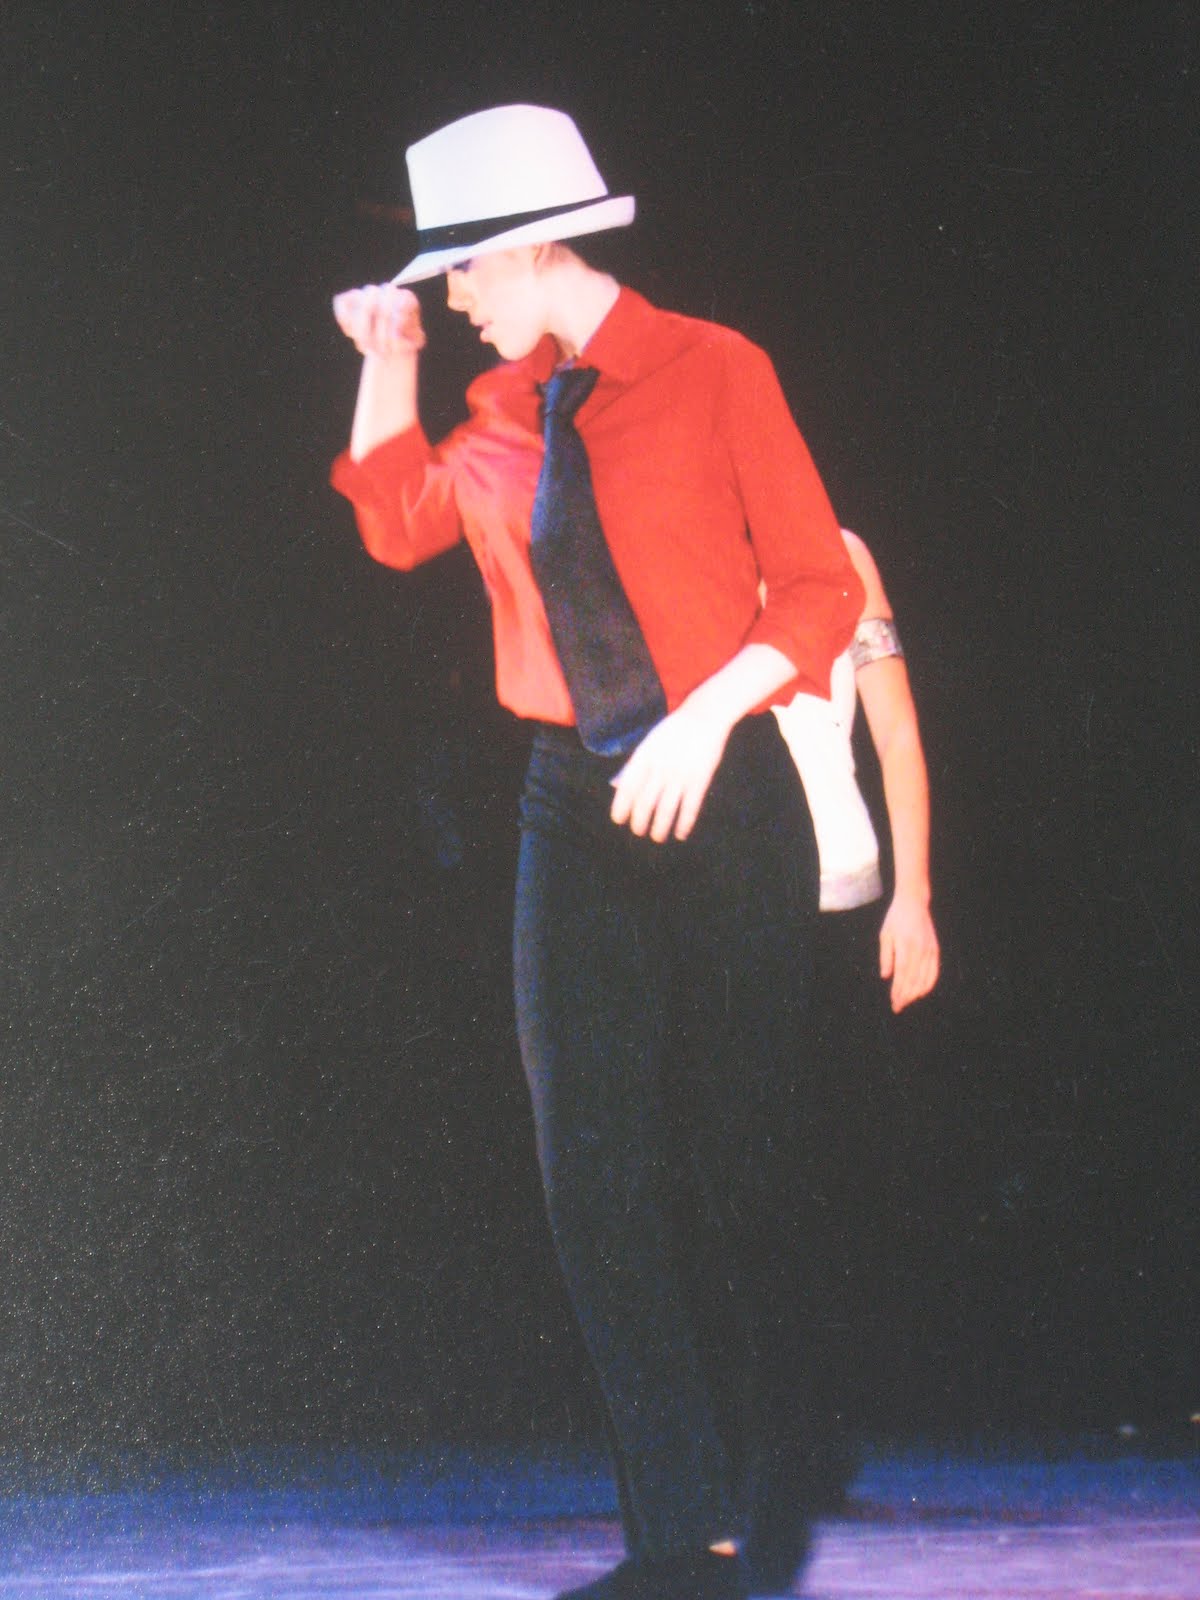 https://blogger.googleusercontent.com/img/b/R29vZ2xl/AVvXsEjwTb9UcN2bivlSN03Rky0uAfnKl4giHlhtZR3f7pTDoHXkGKl8fQyIX6mP2XNqTekdDJkMfR7ssasXhA1YObQ9g1soP1NzpWjzsVKsW8gWeP1FcCBIbFltXBlosq7jbJ5v9qbYt5sspmQ/s1600/Michael+Jackson+dance.JPG